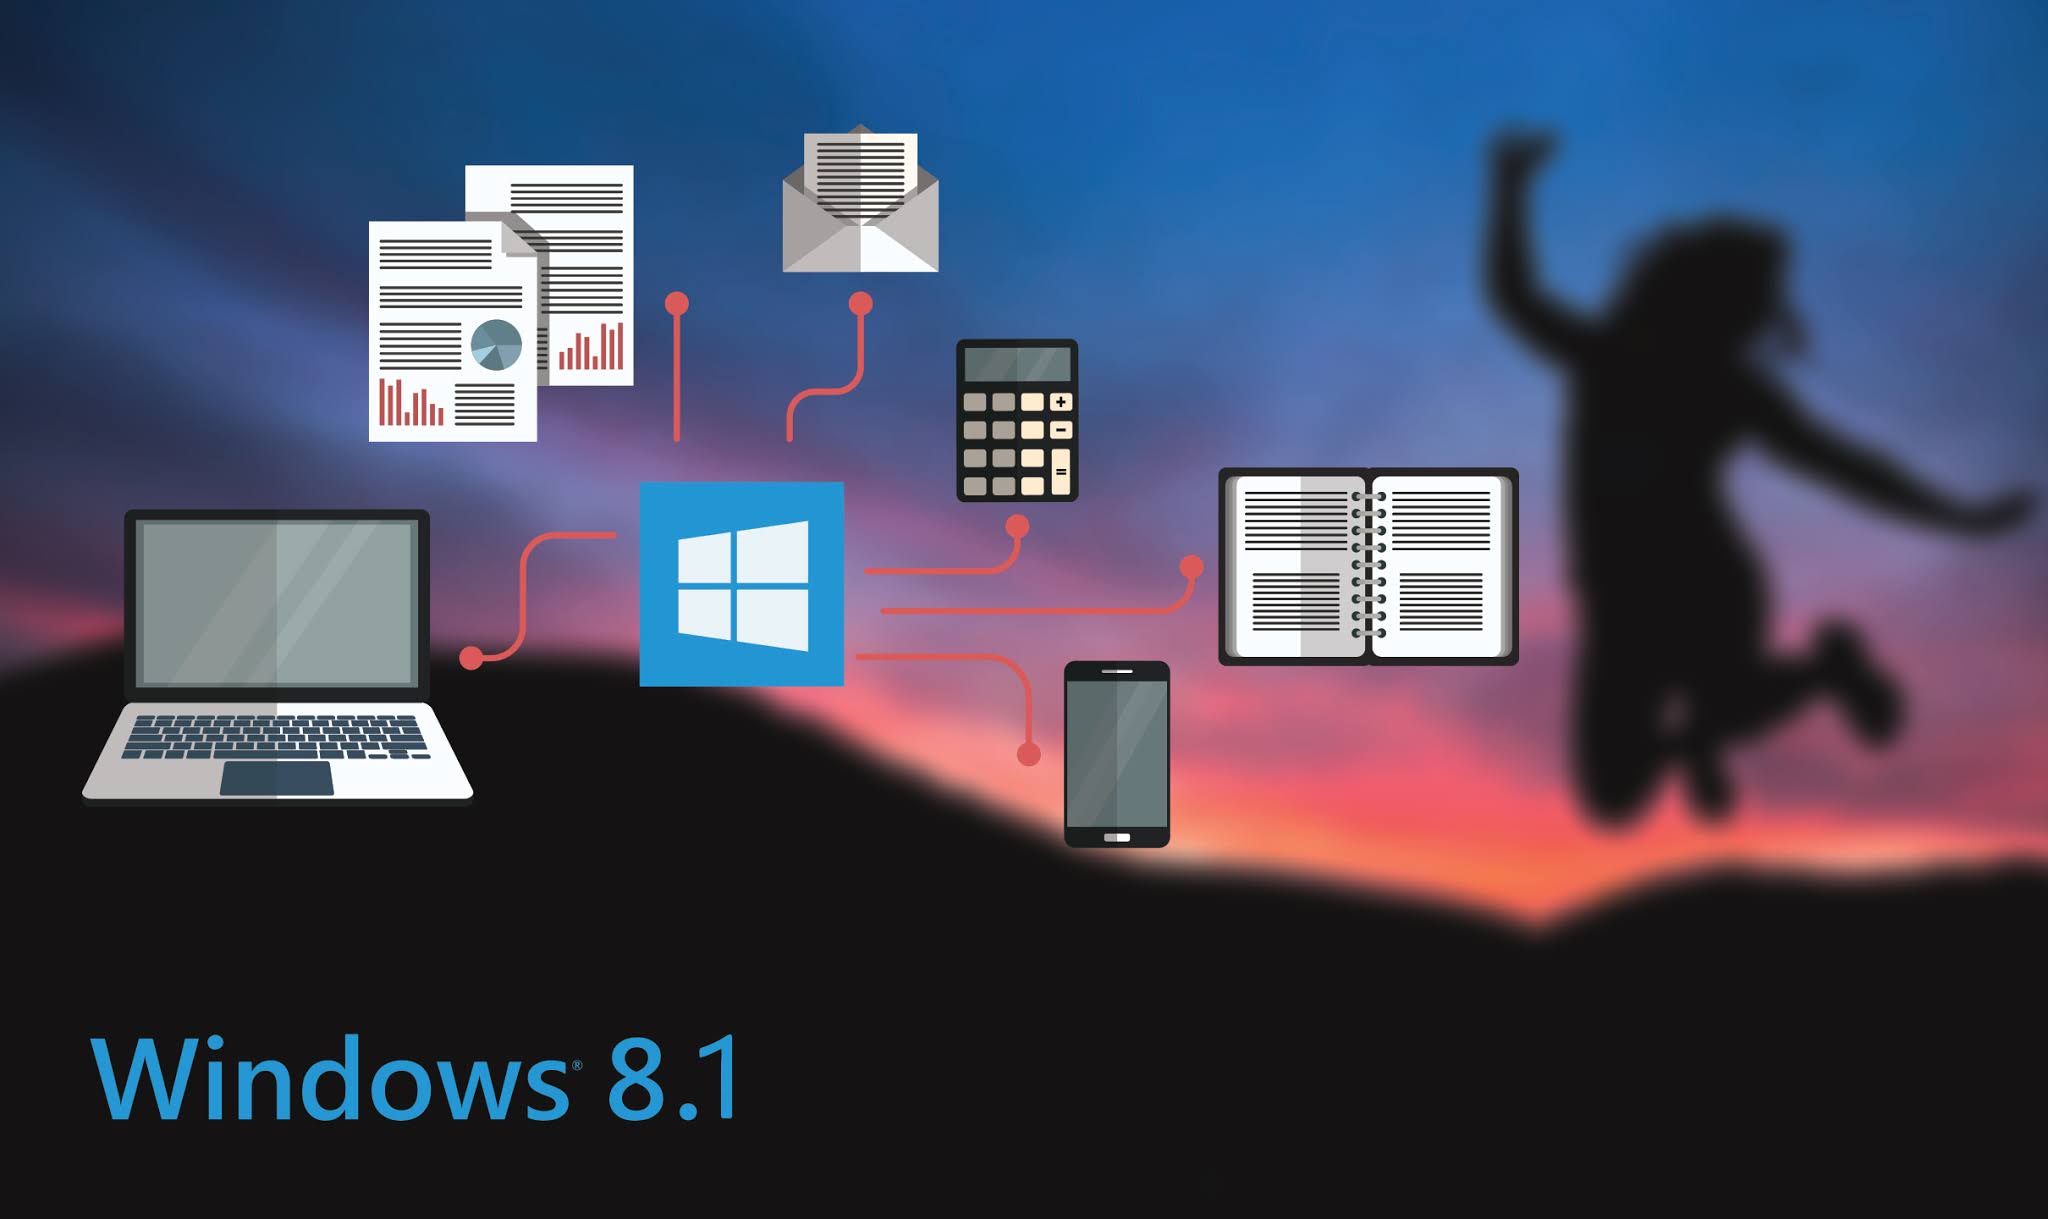 Windows 8.1 pro perfectly fits my needs